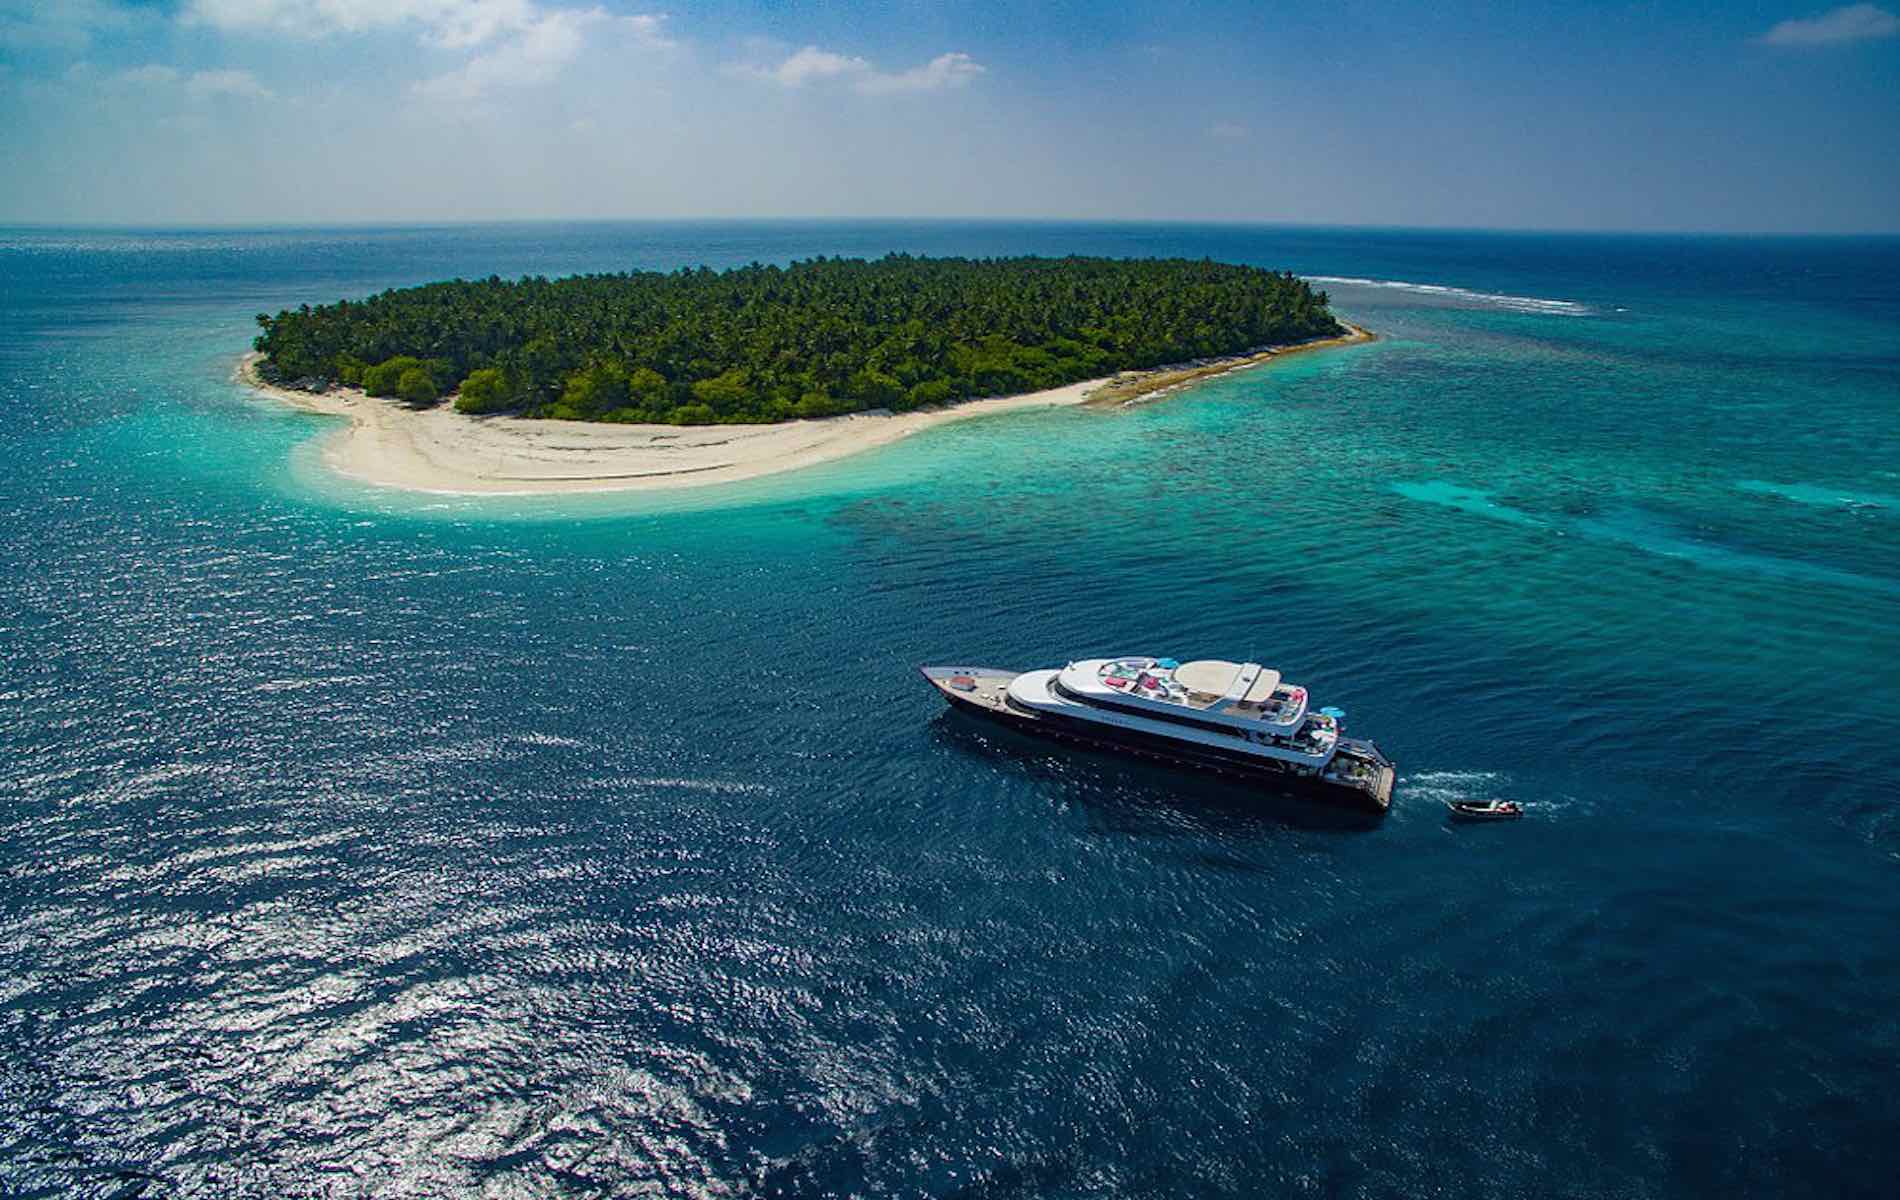 Канал индийского океана. Яхта Azalea. Дайв сафари Мальдивы 2023. Индийский океан Мальдивы. Maldive Victory судно Мальдивы.